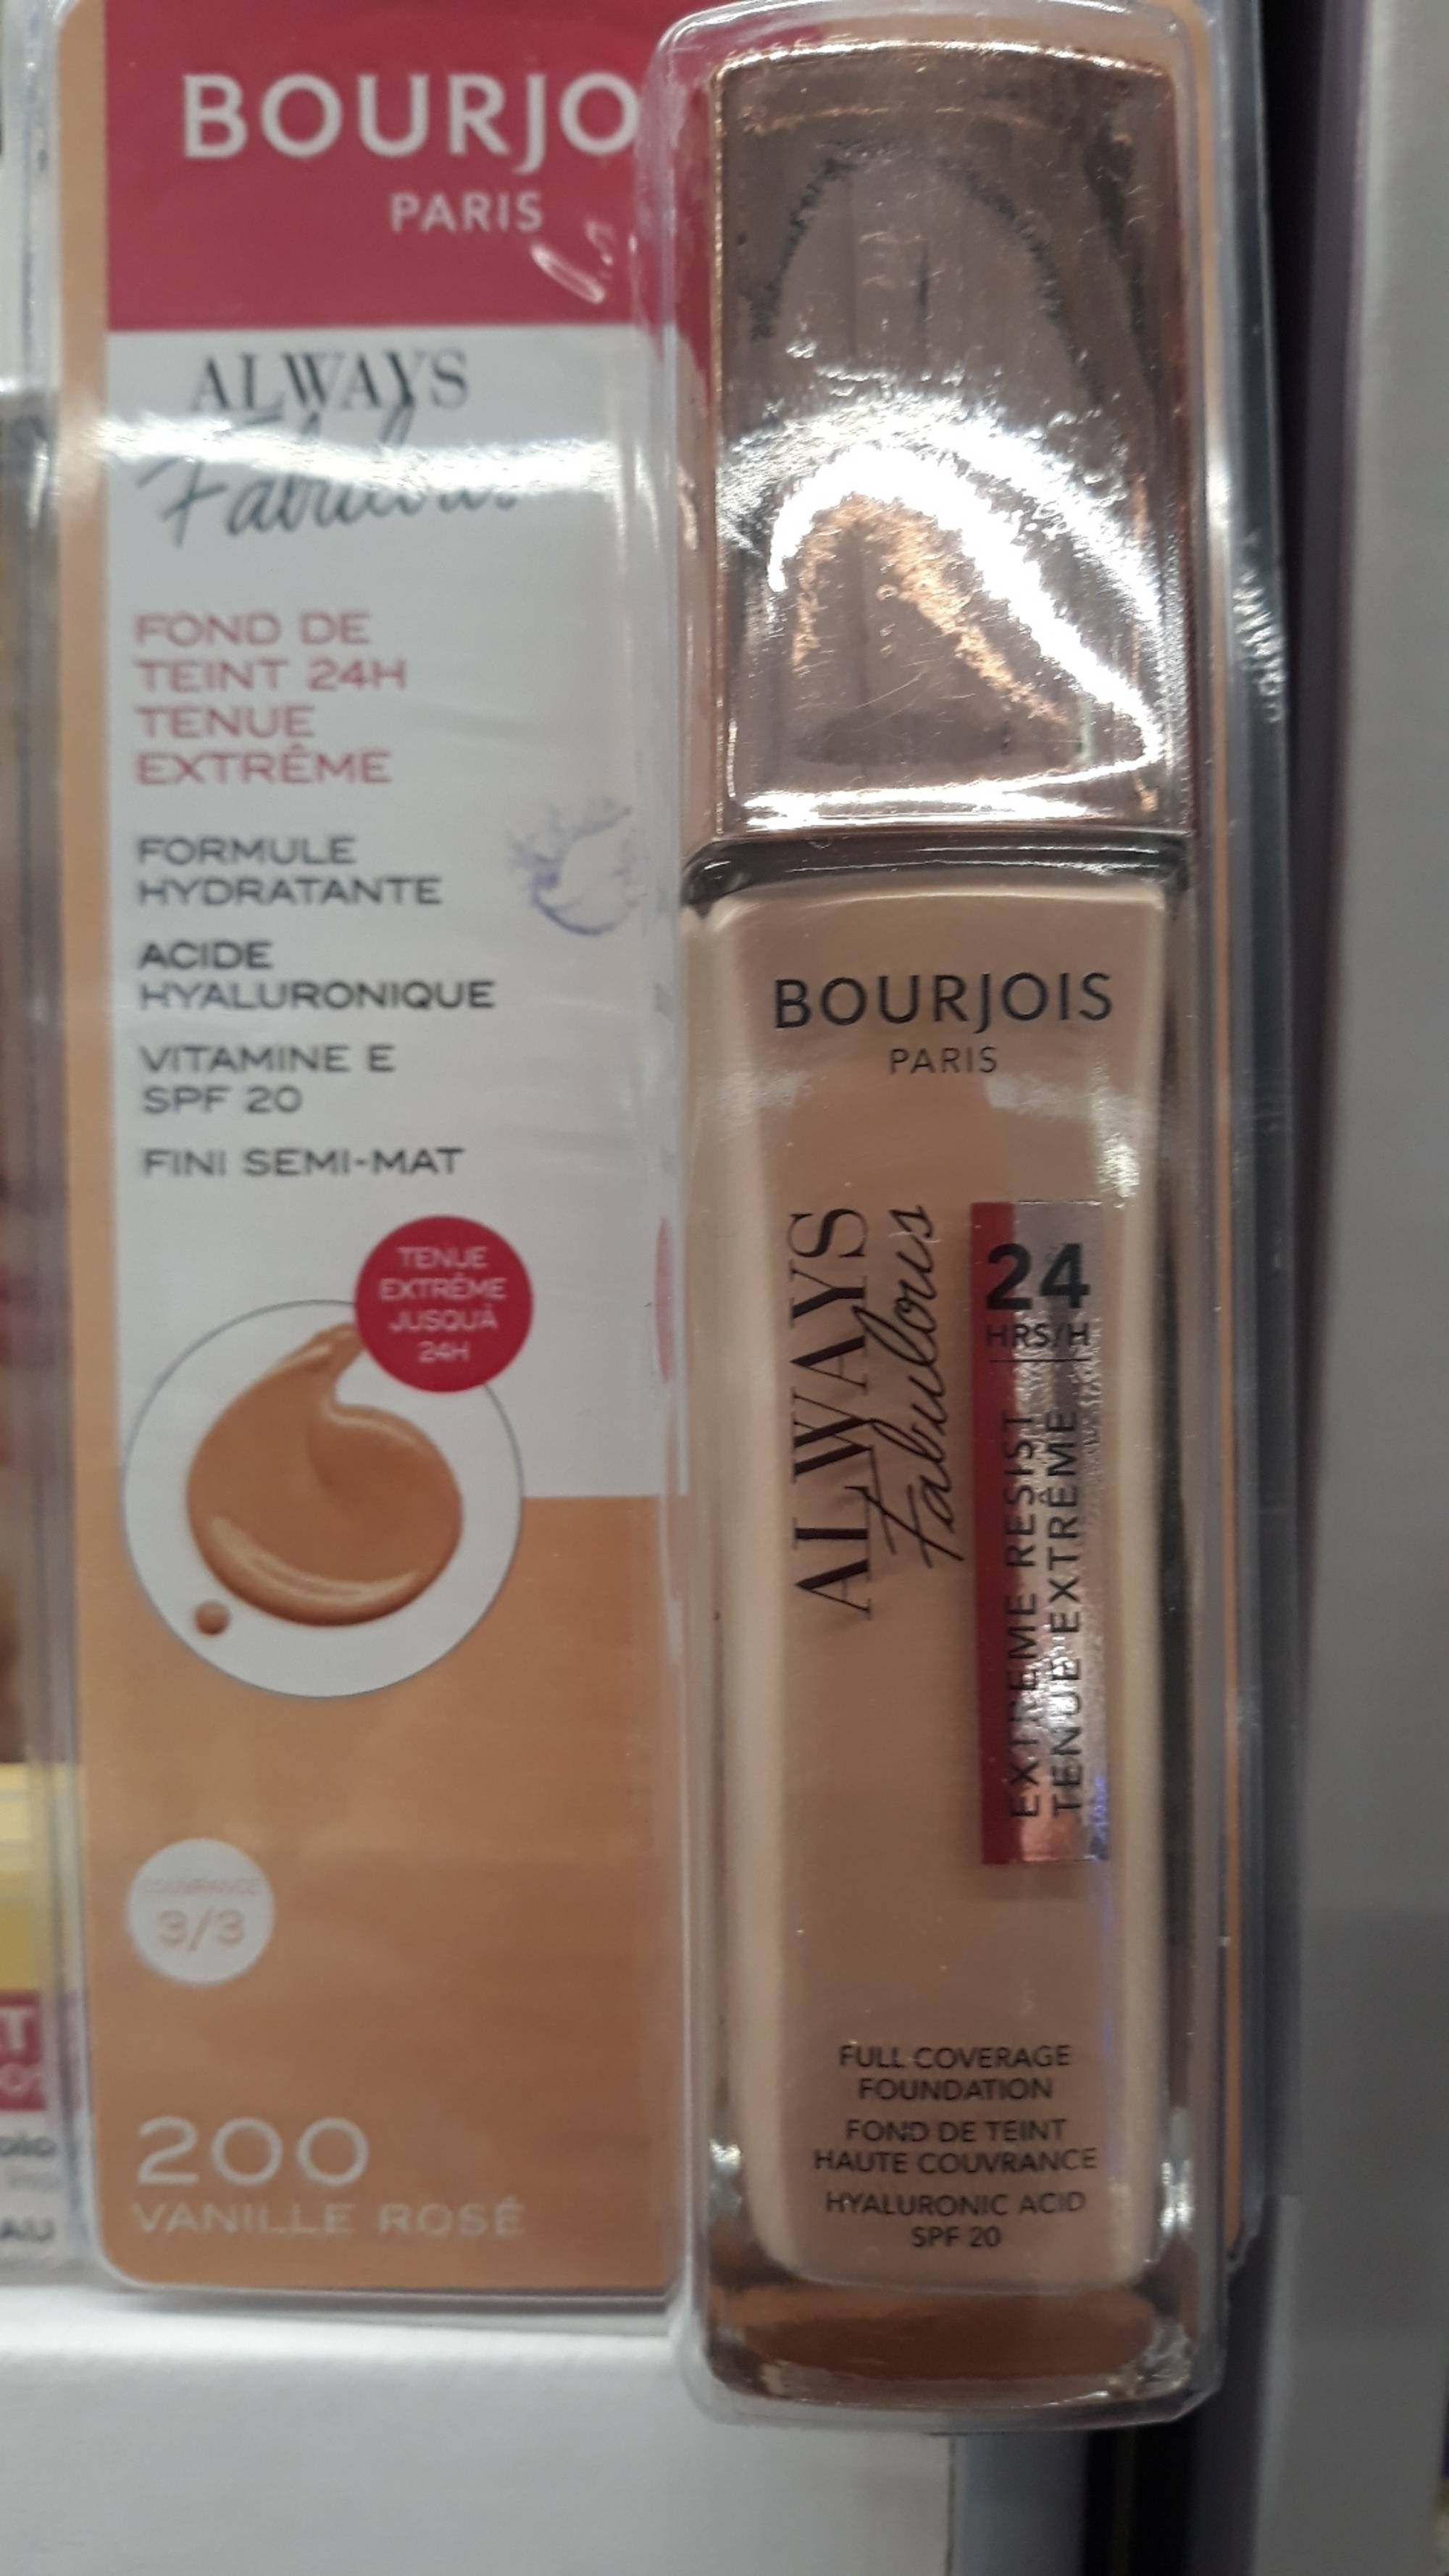 BOURJOIS - Always fabulous - Fond de teint 24H 200 vanille rosé